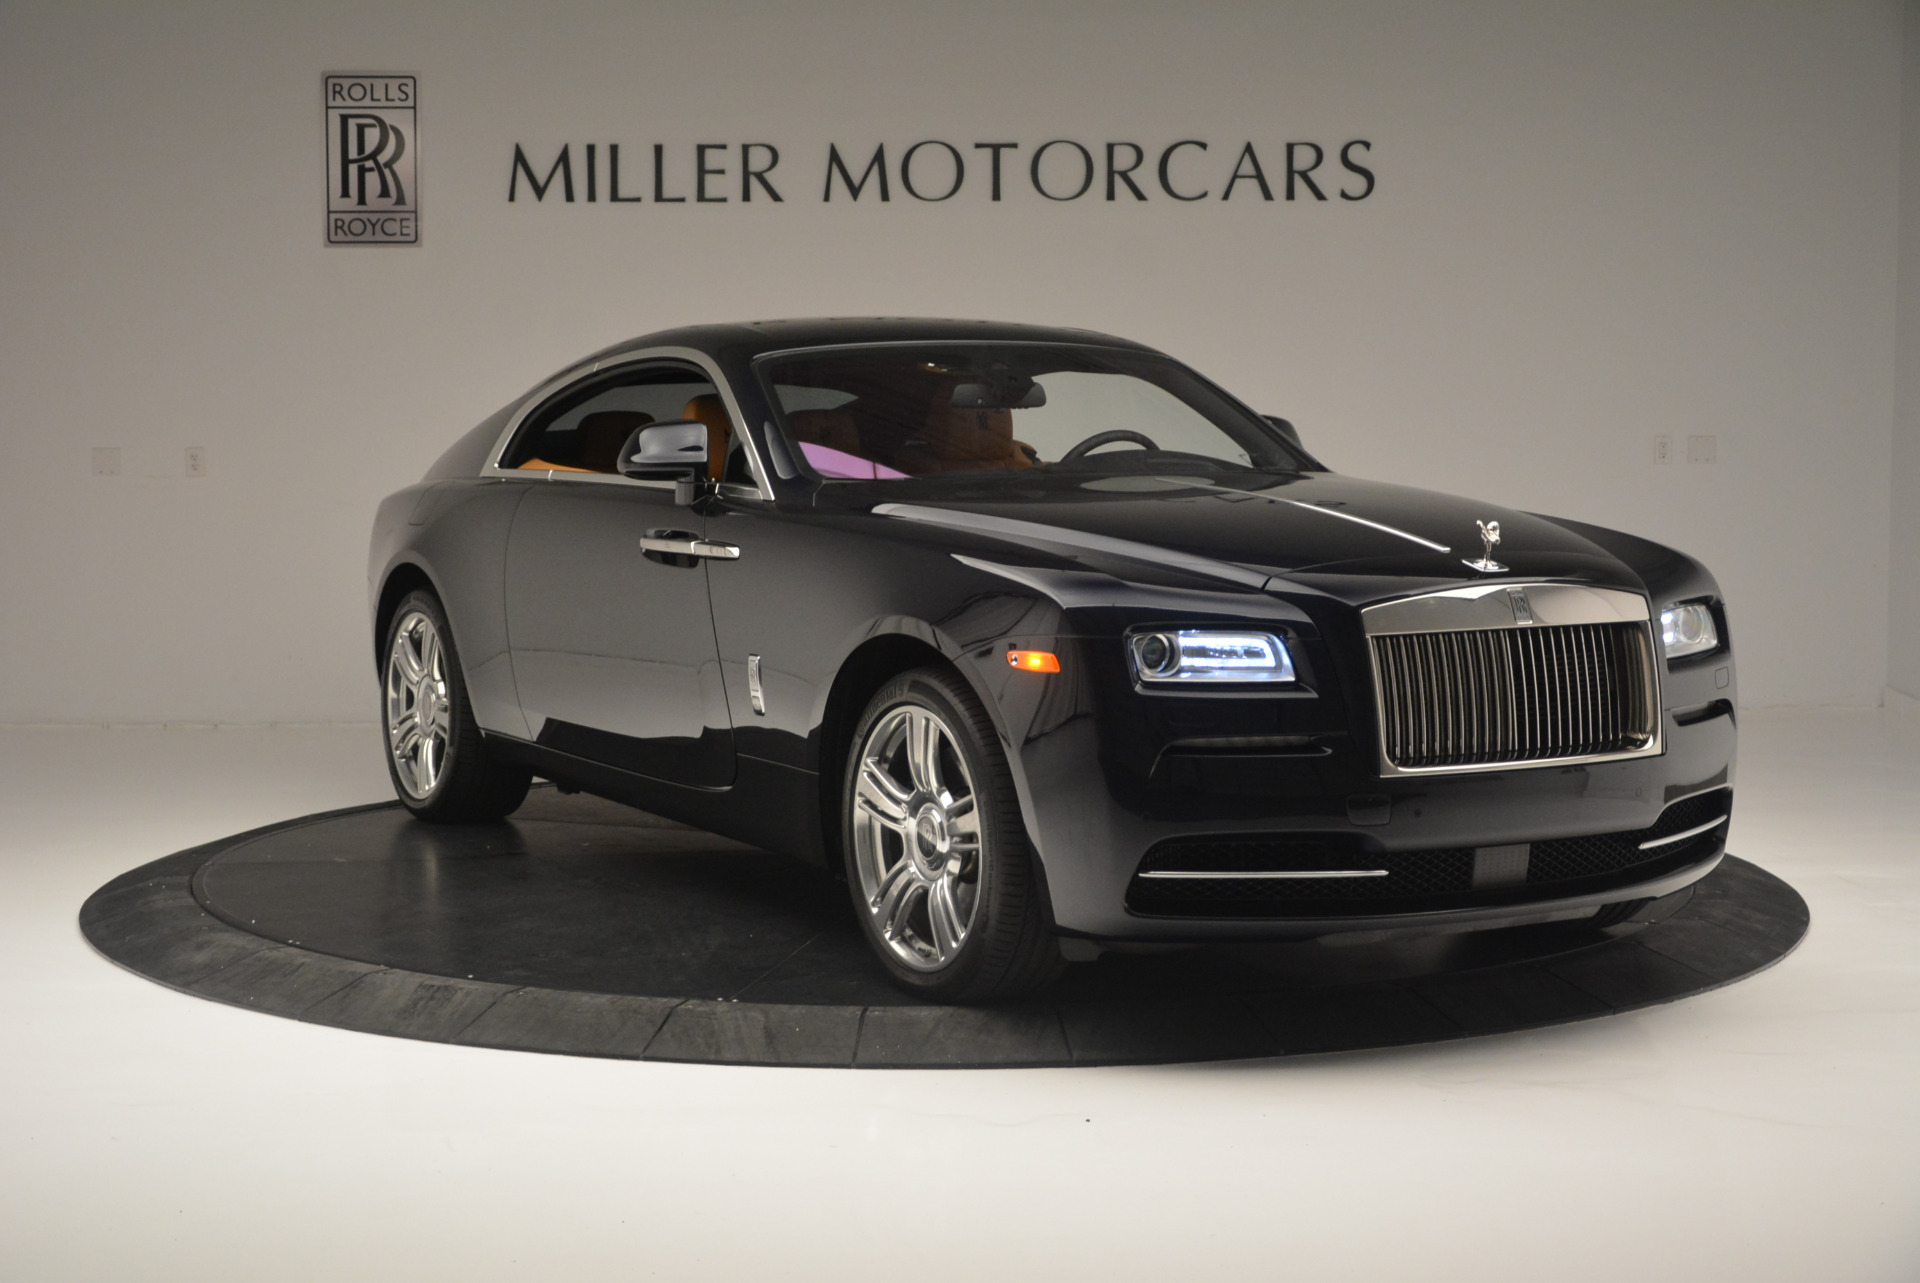 Rolls Royce Car Care Kit — Miller Motorcars Boutique